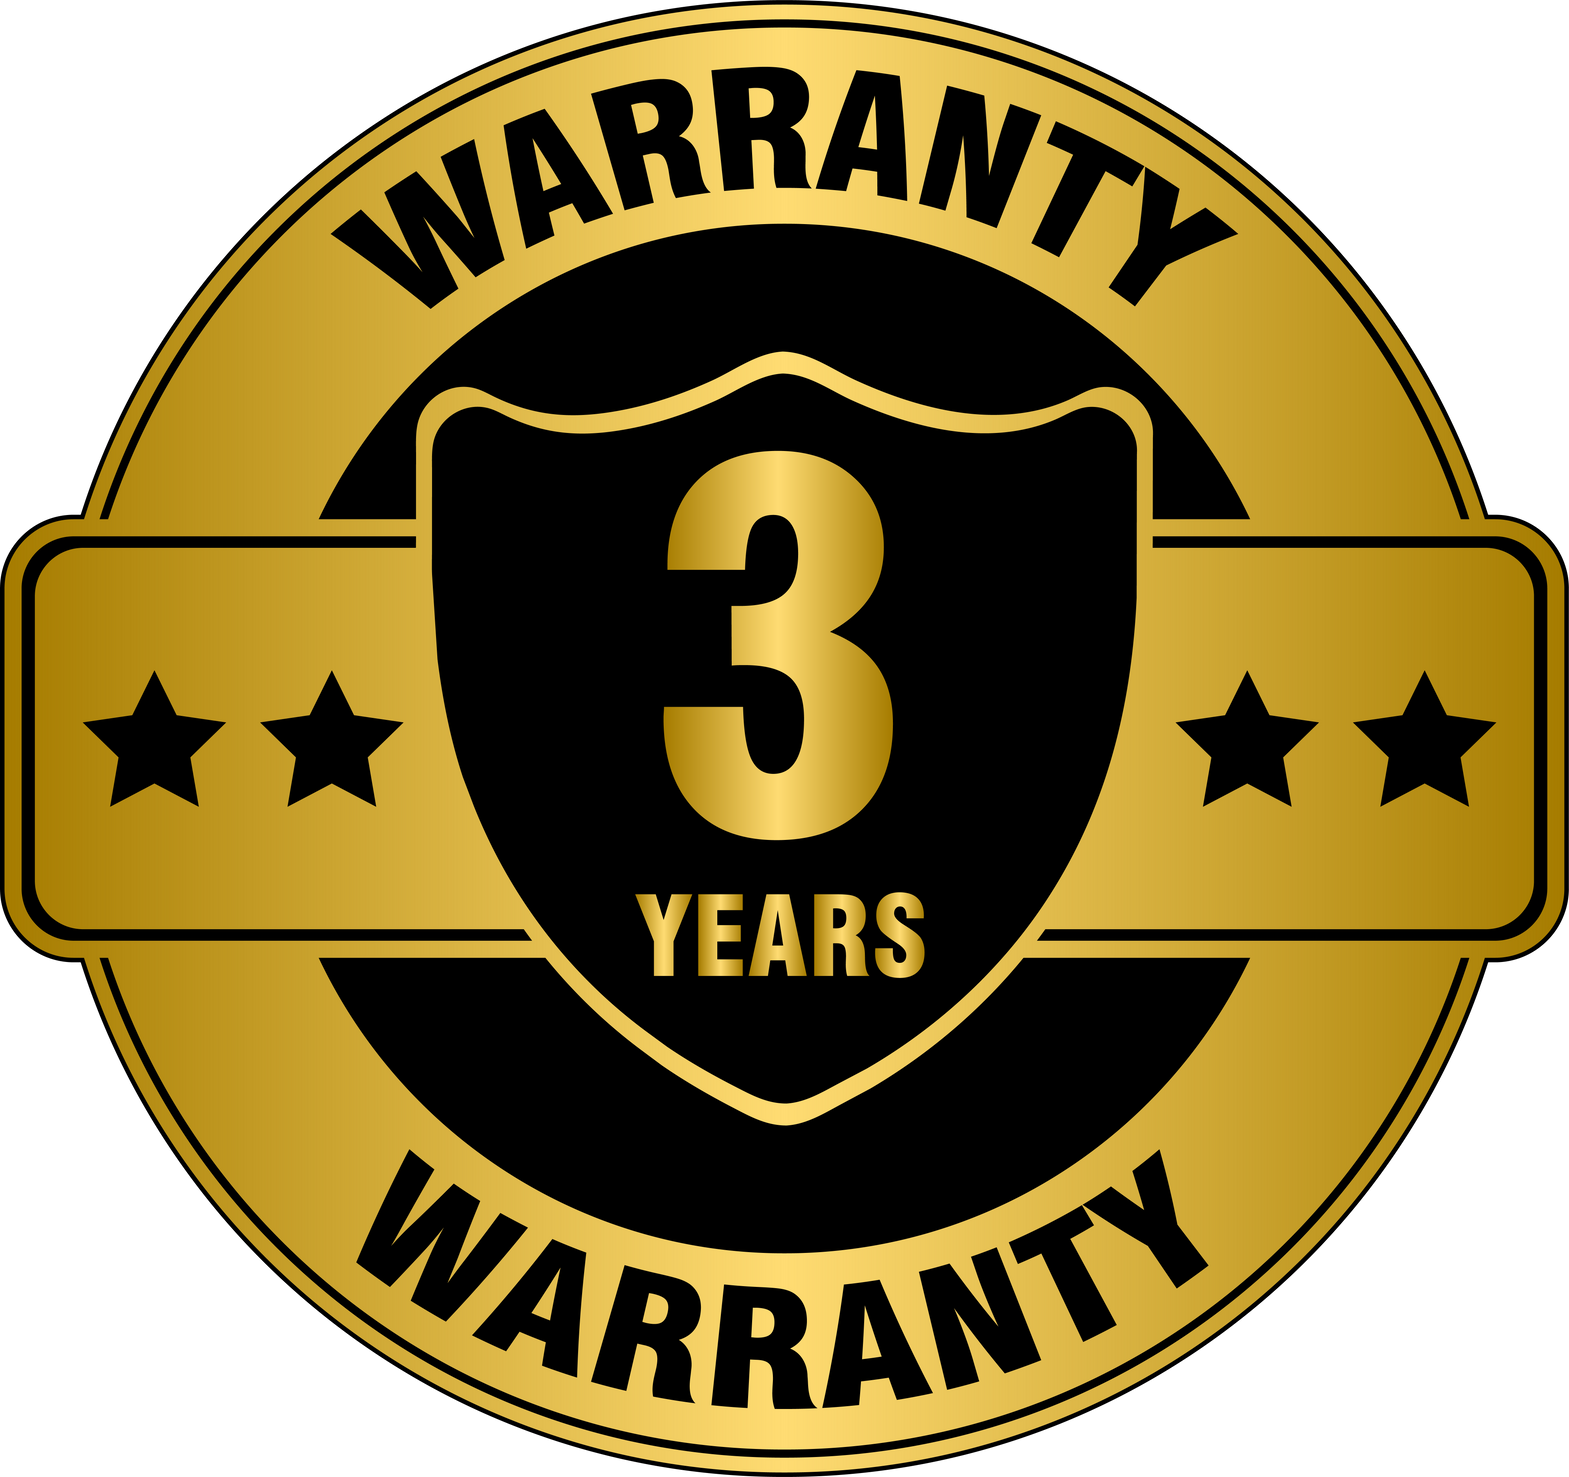 3 Years Warranty Golden Label